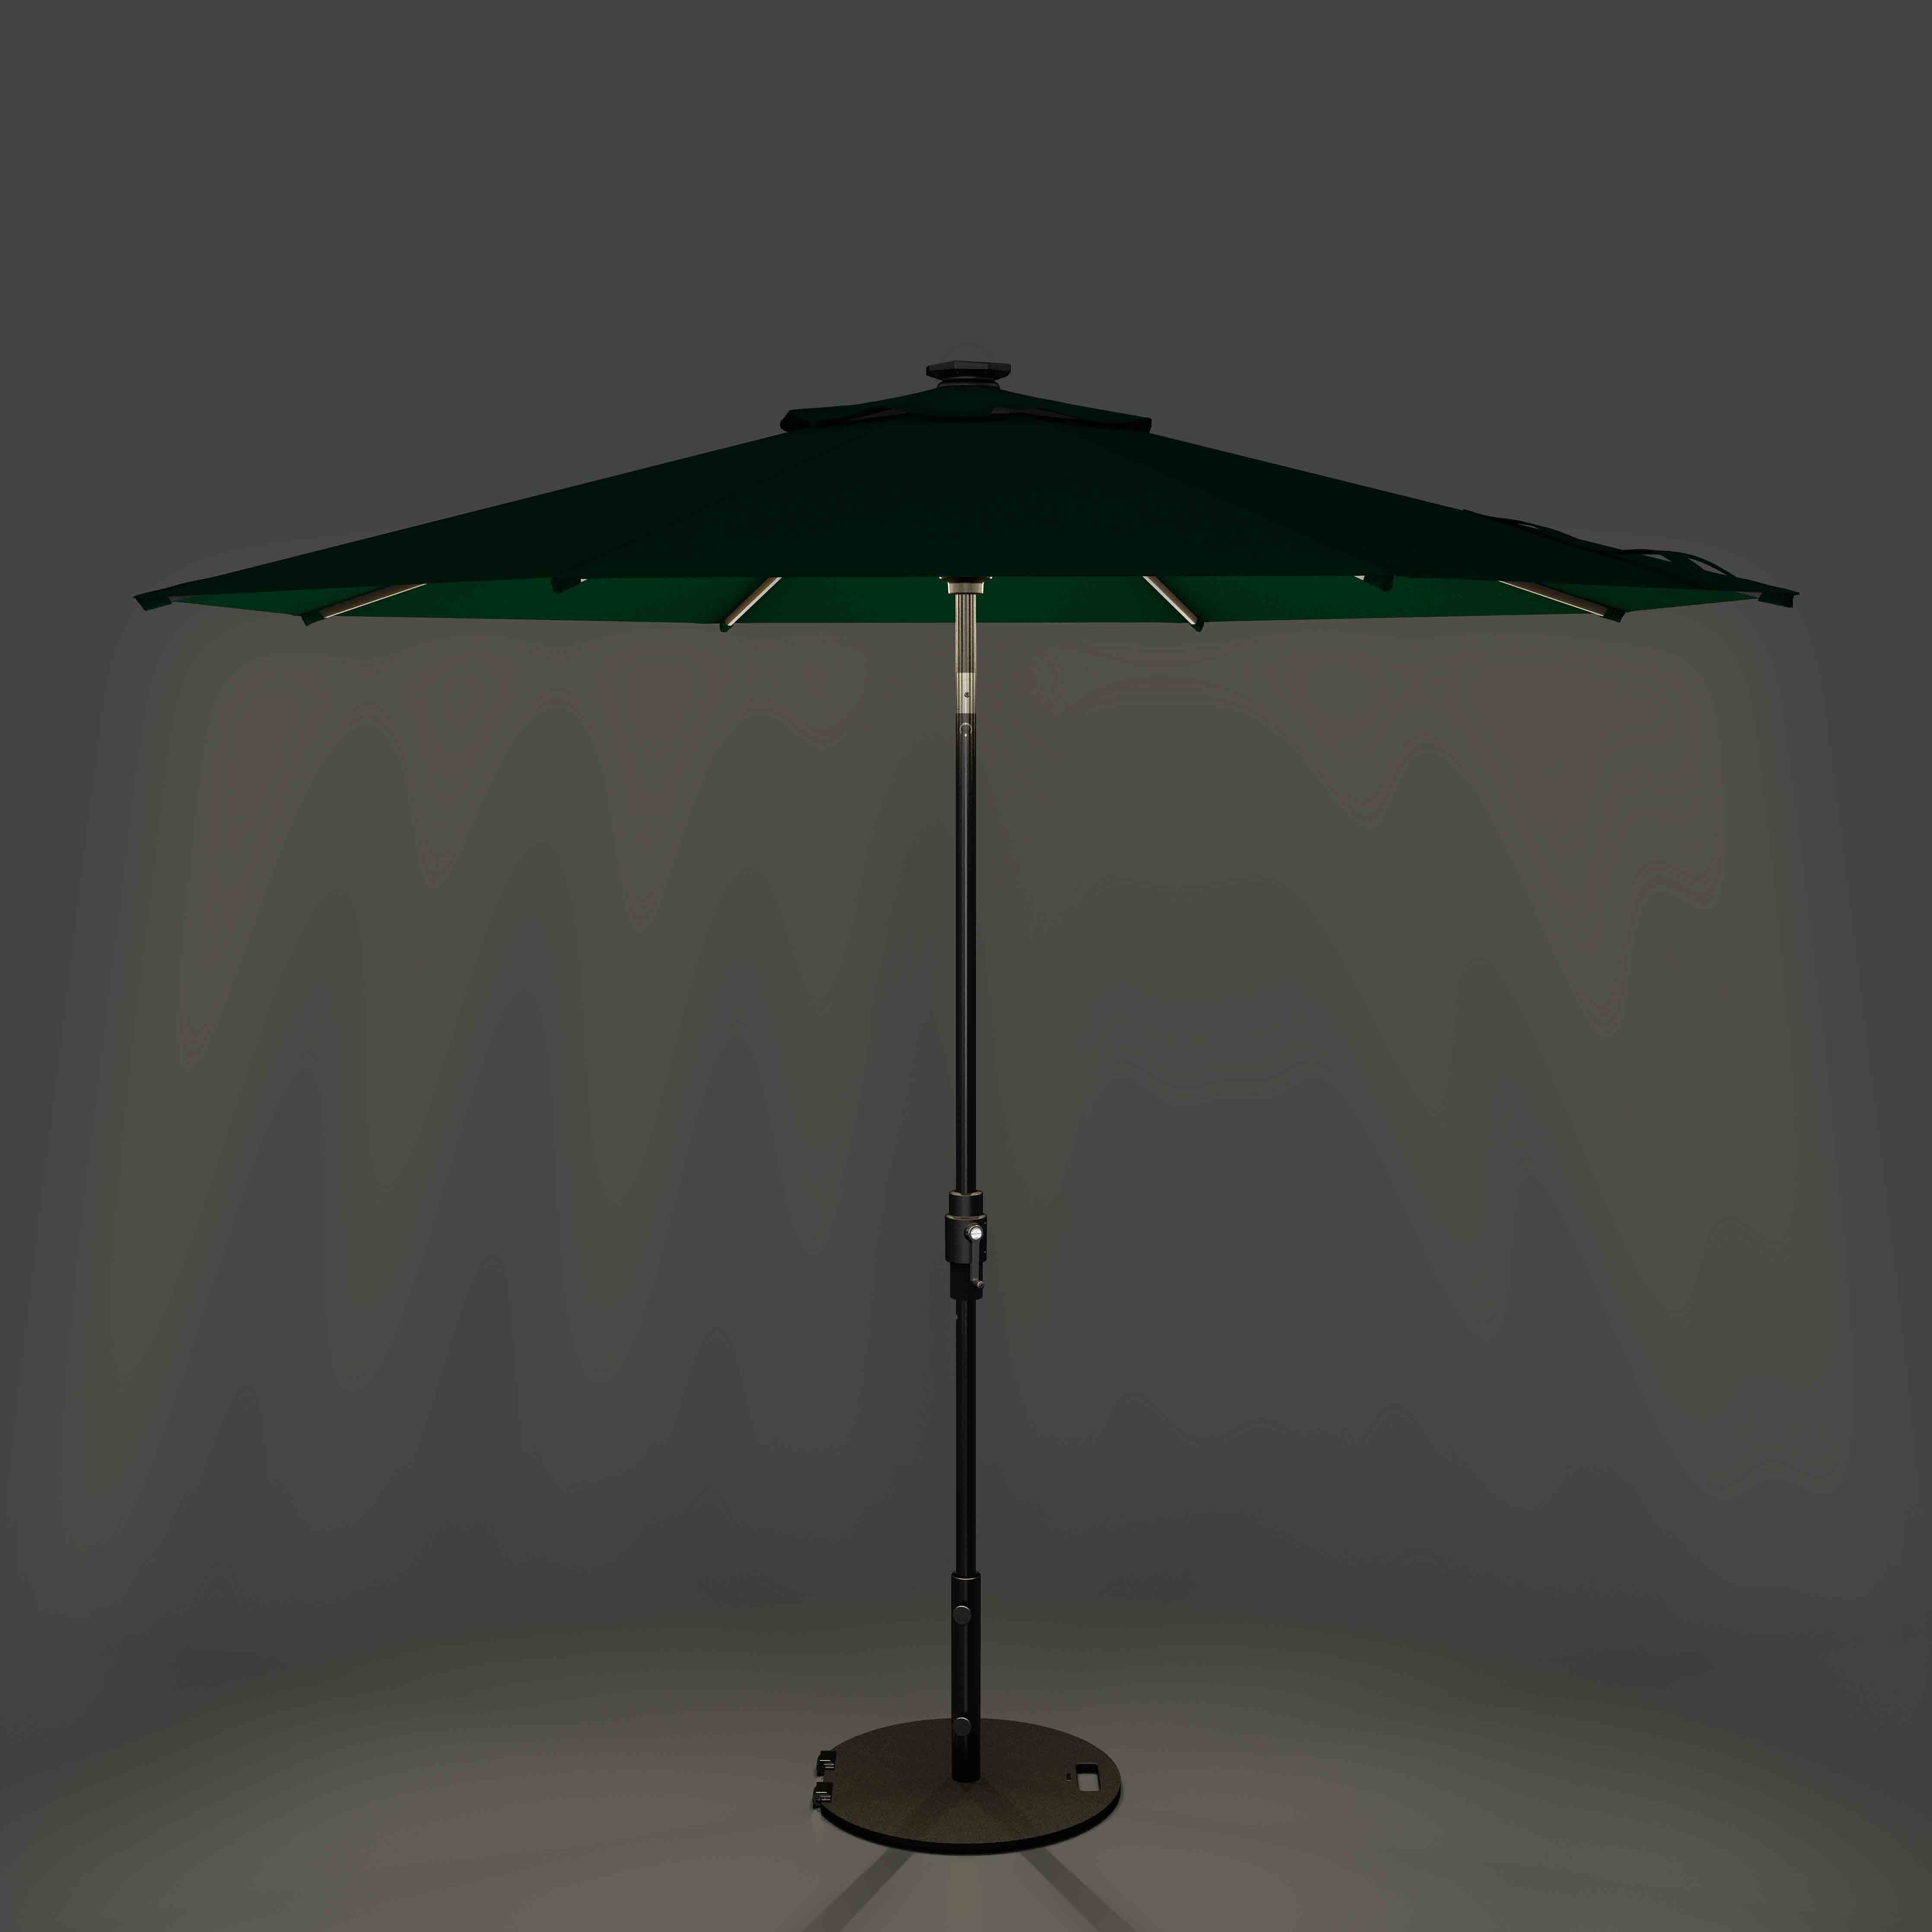 The LED Swilt™ - Sunbrella Forest Green